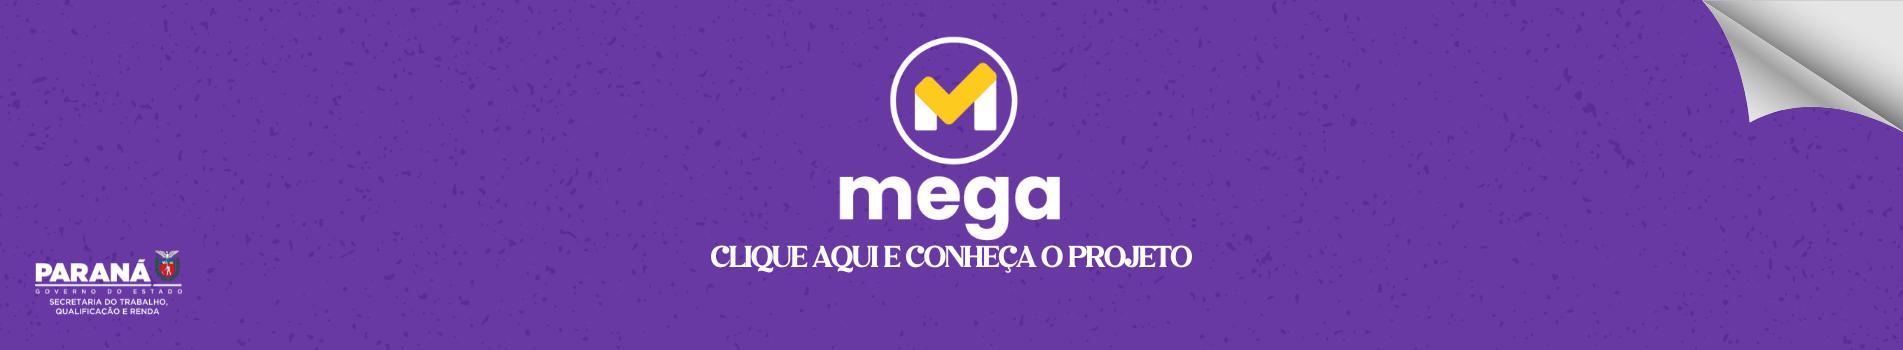 banner projeto mega